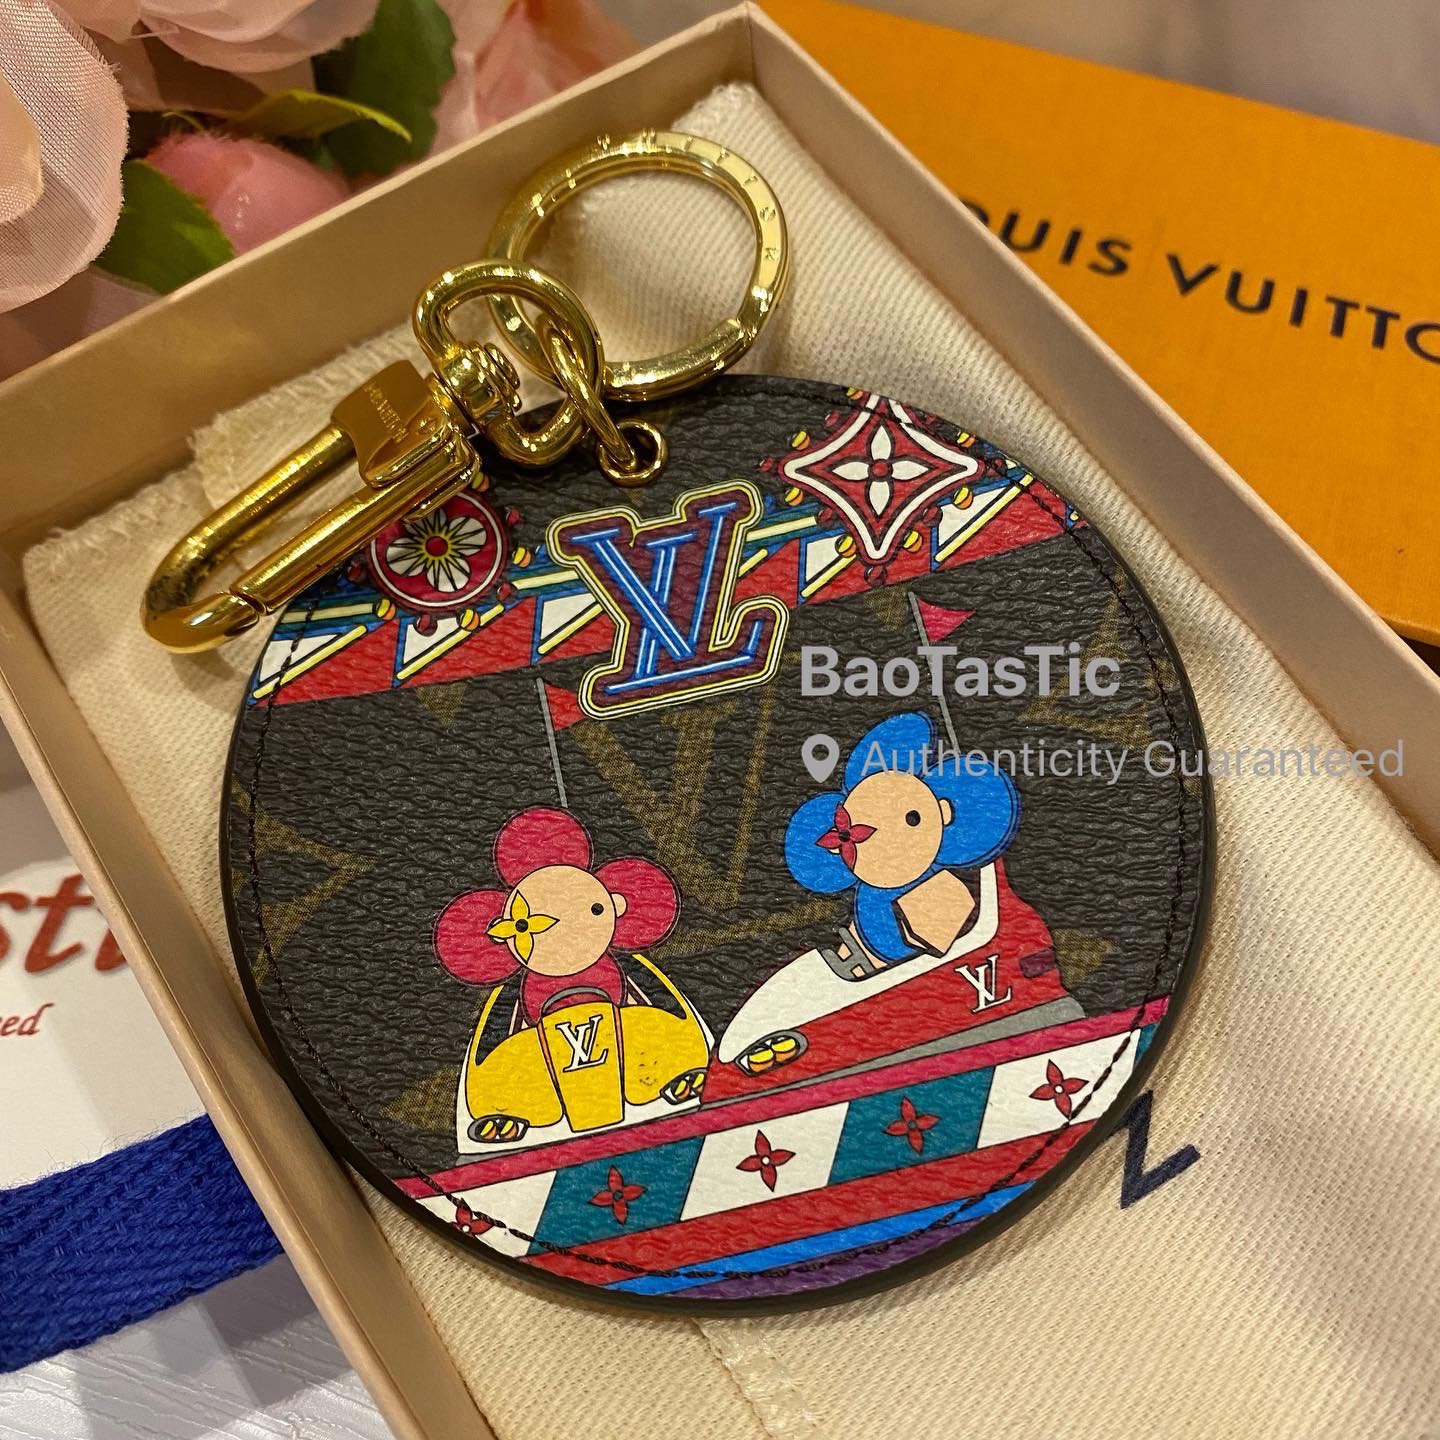 Louis Vuitton Fleur D' Epi Black Resin Bag Charm Key Holder at